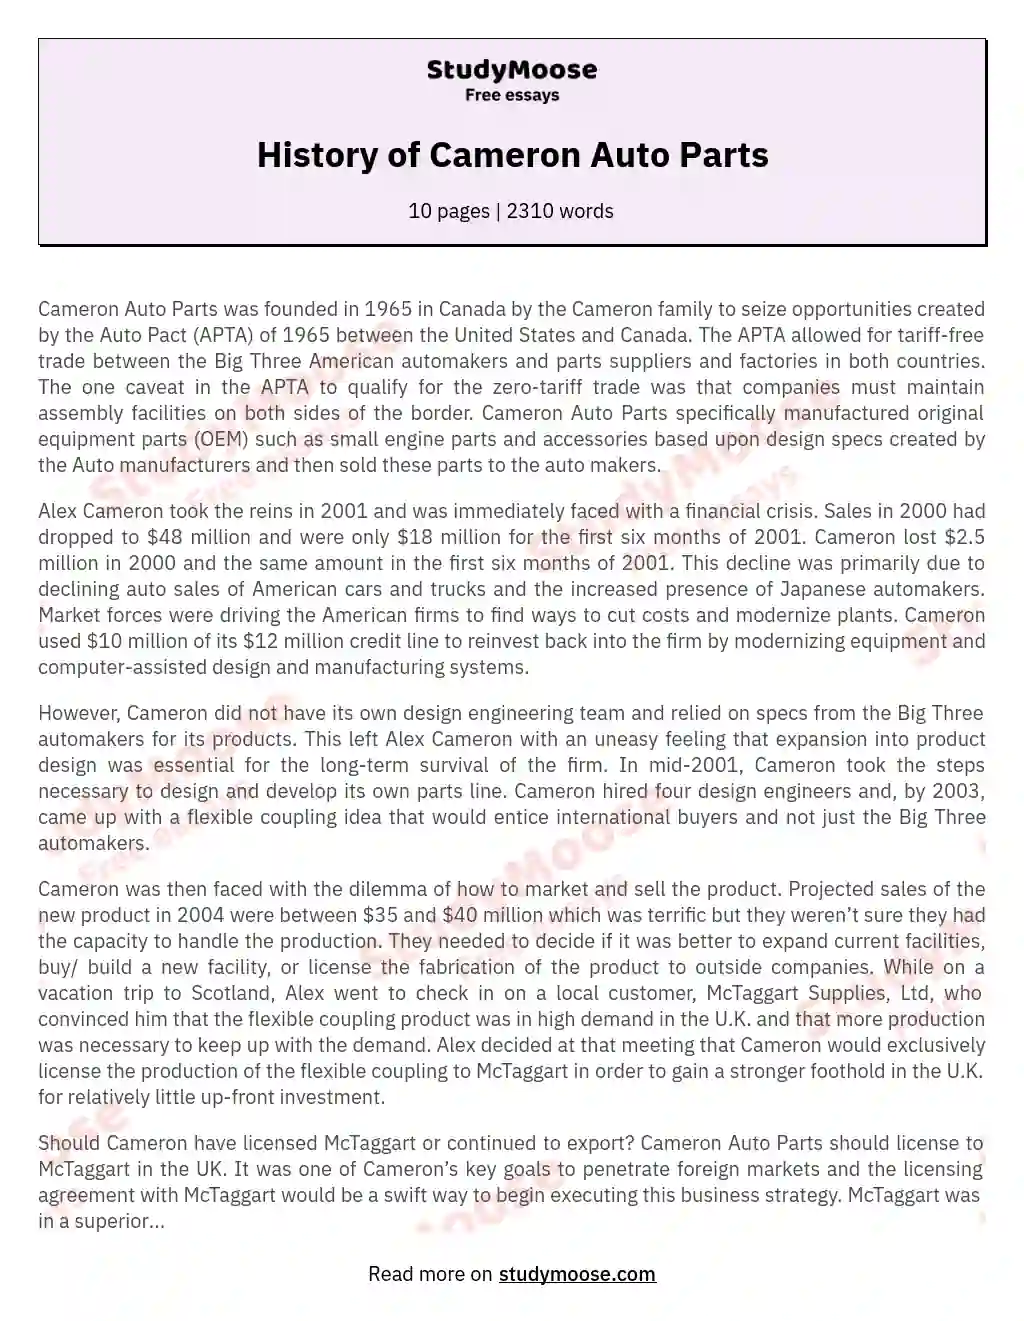 History of Cameron Auto Parts